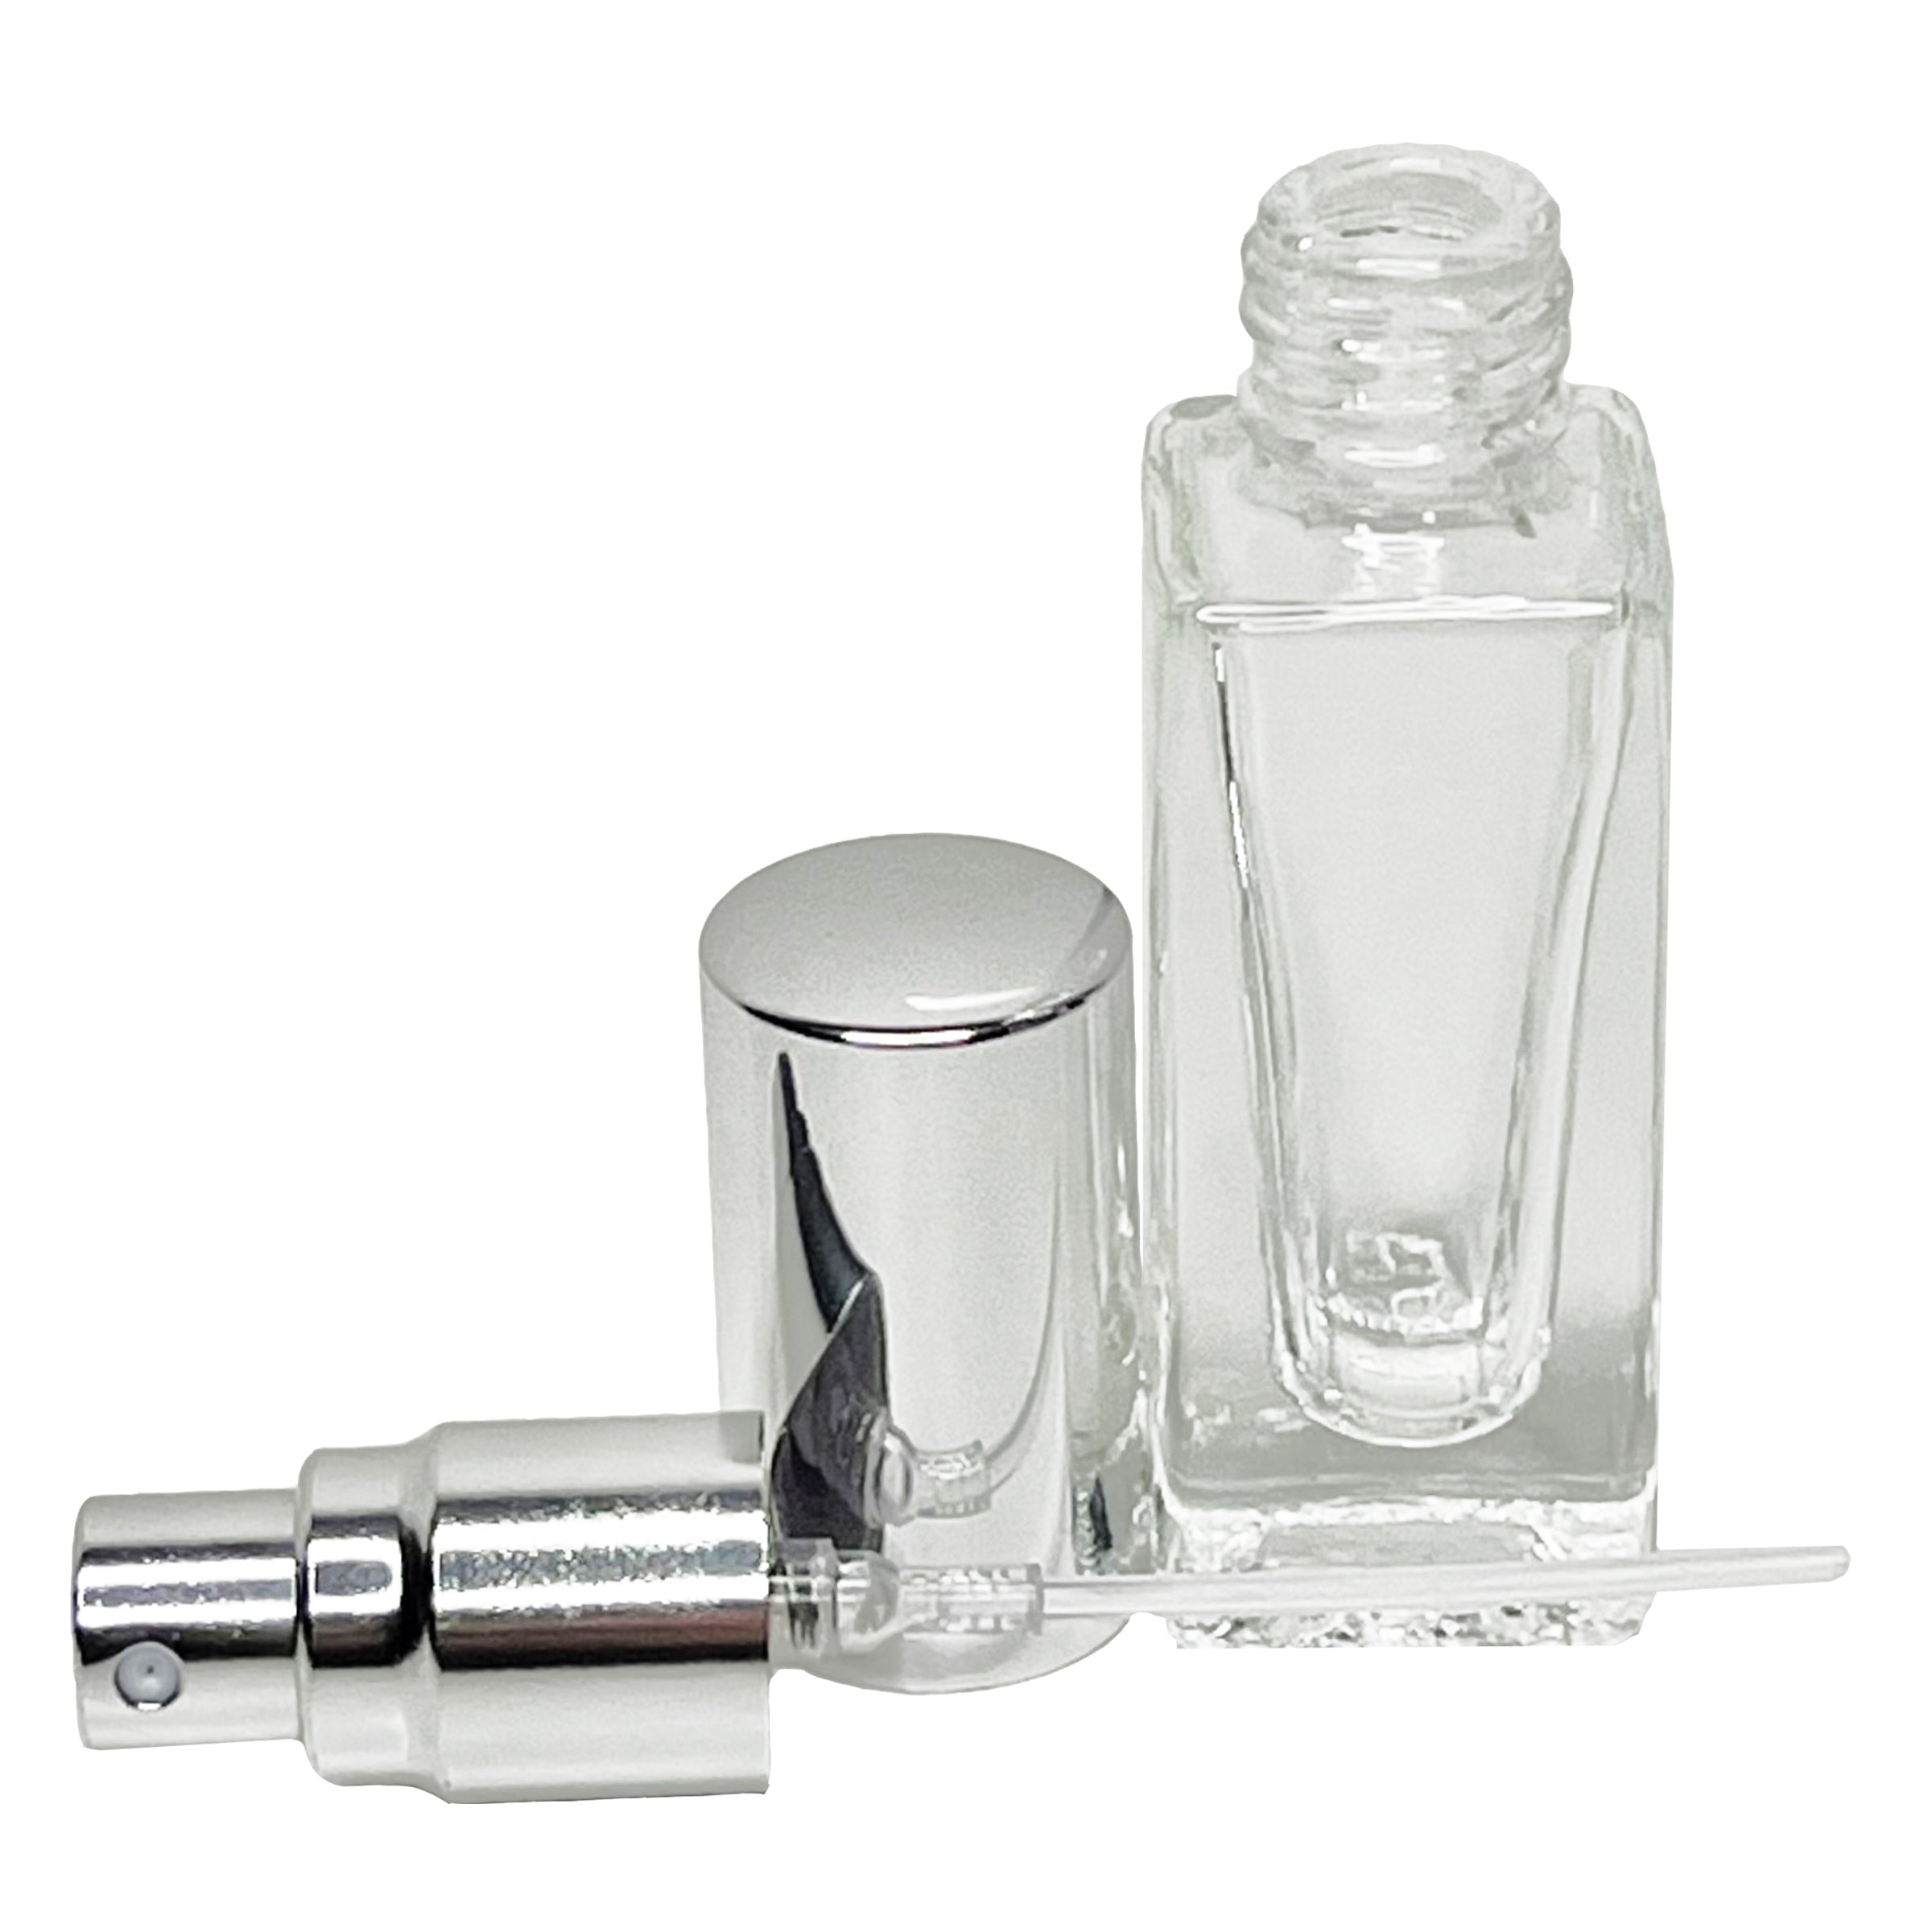 6ml .2oz Thick Glass mini perfume spray bottles 3 pack samples